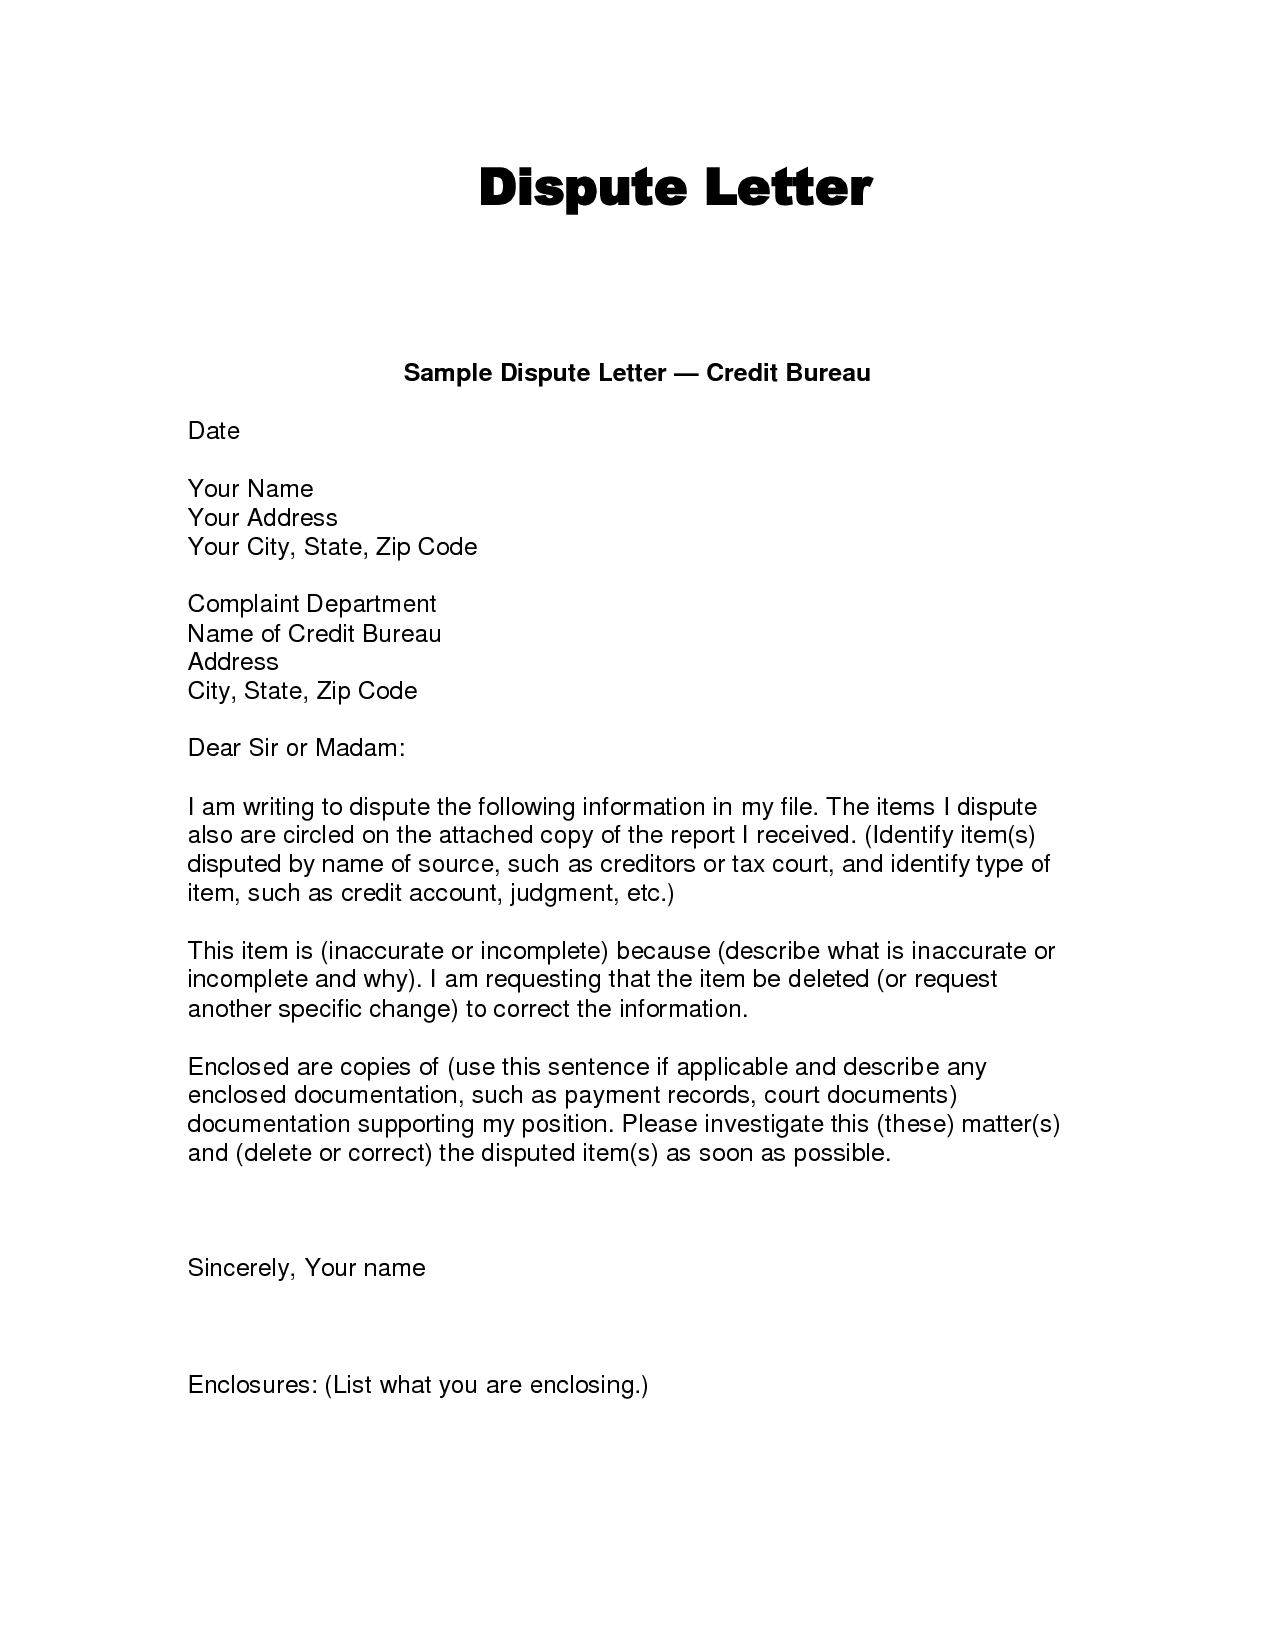 Writing Dispute Letter Format  Make A Habit   Credit Bureaus with regard to Credit Report Dispute Letter Template